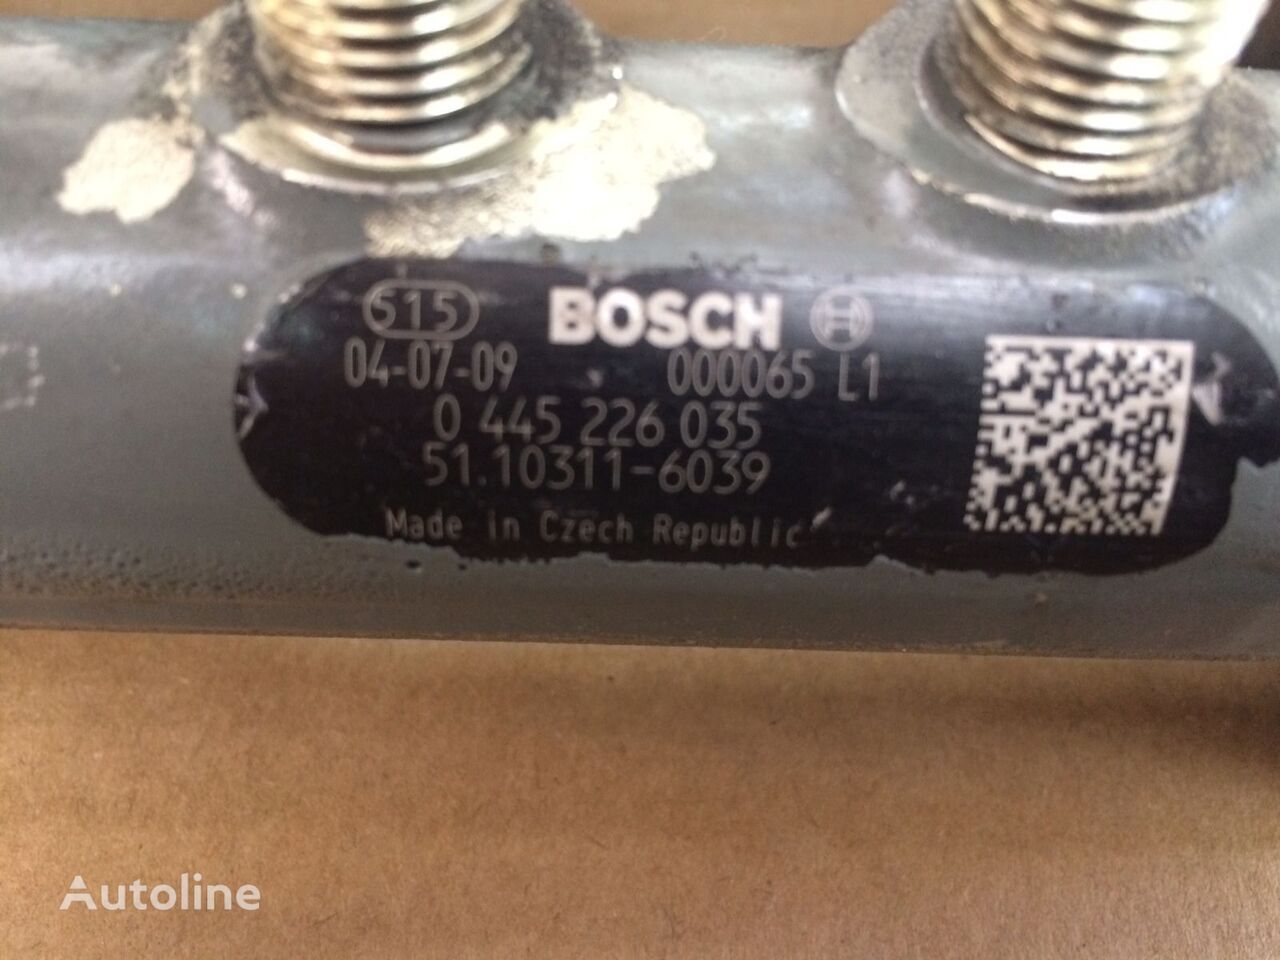 Injektor för Lastbil Bosch - TUBO PRESSIONE COMMON RAIL BOSCH   MAN: bild 6